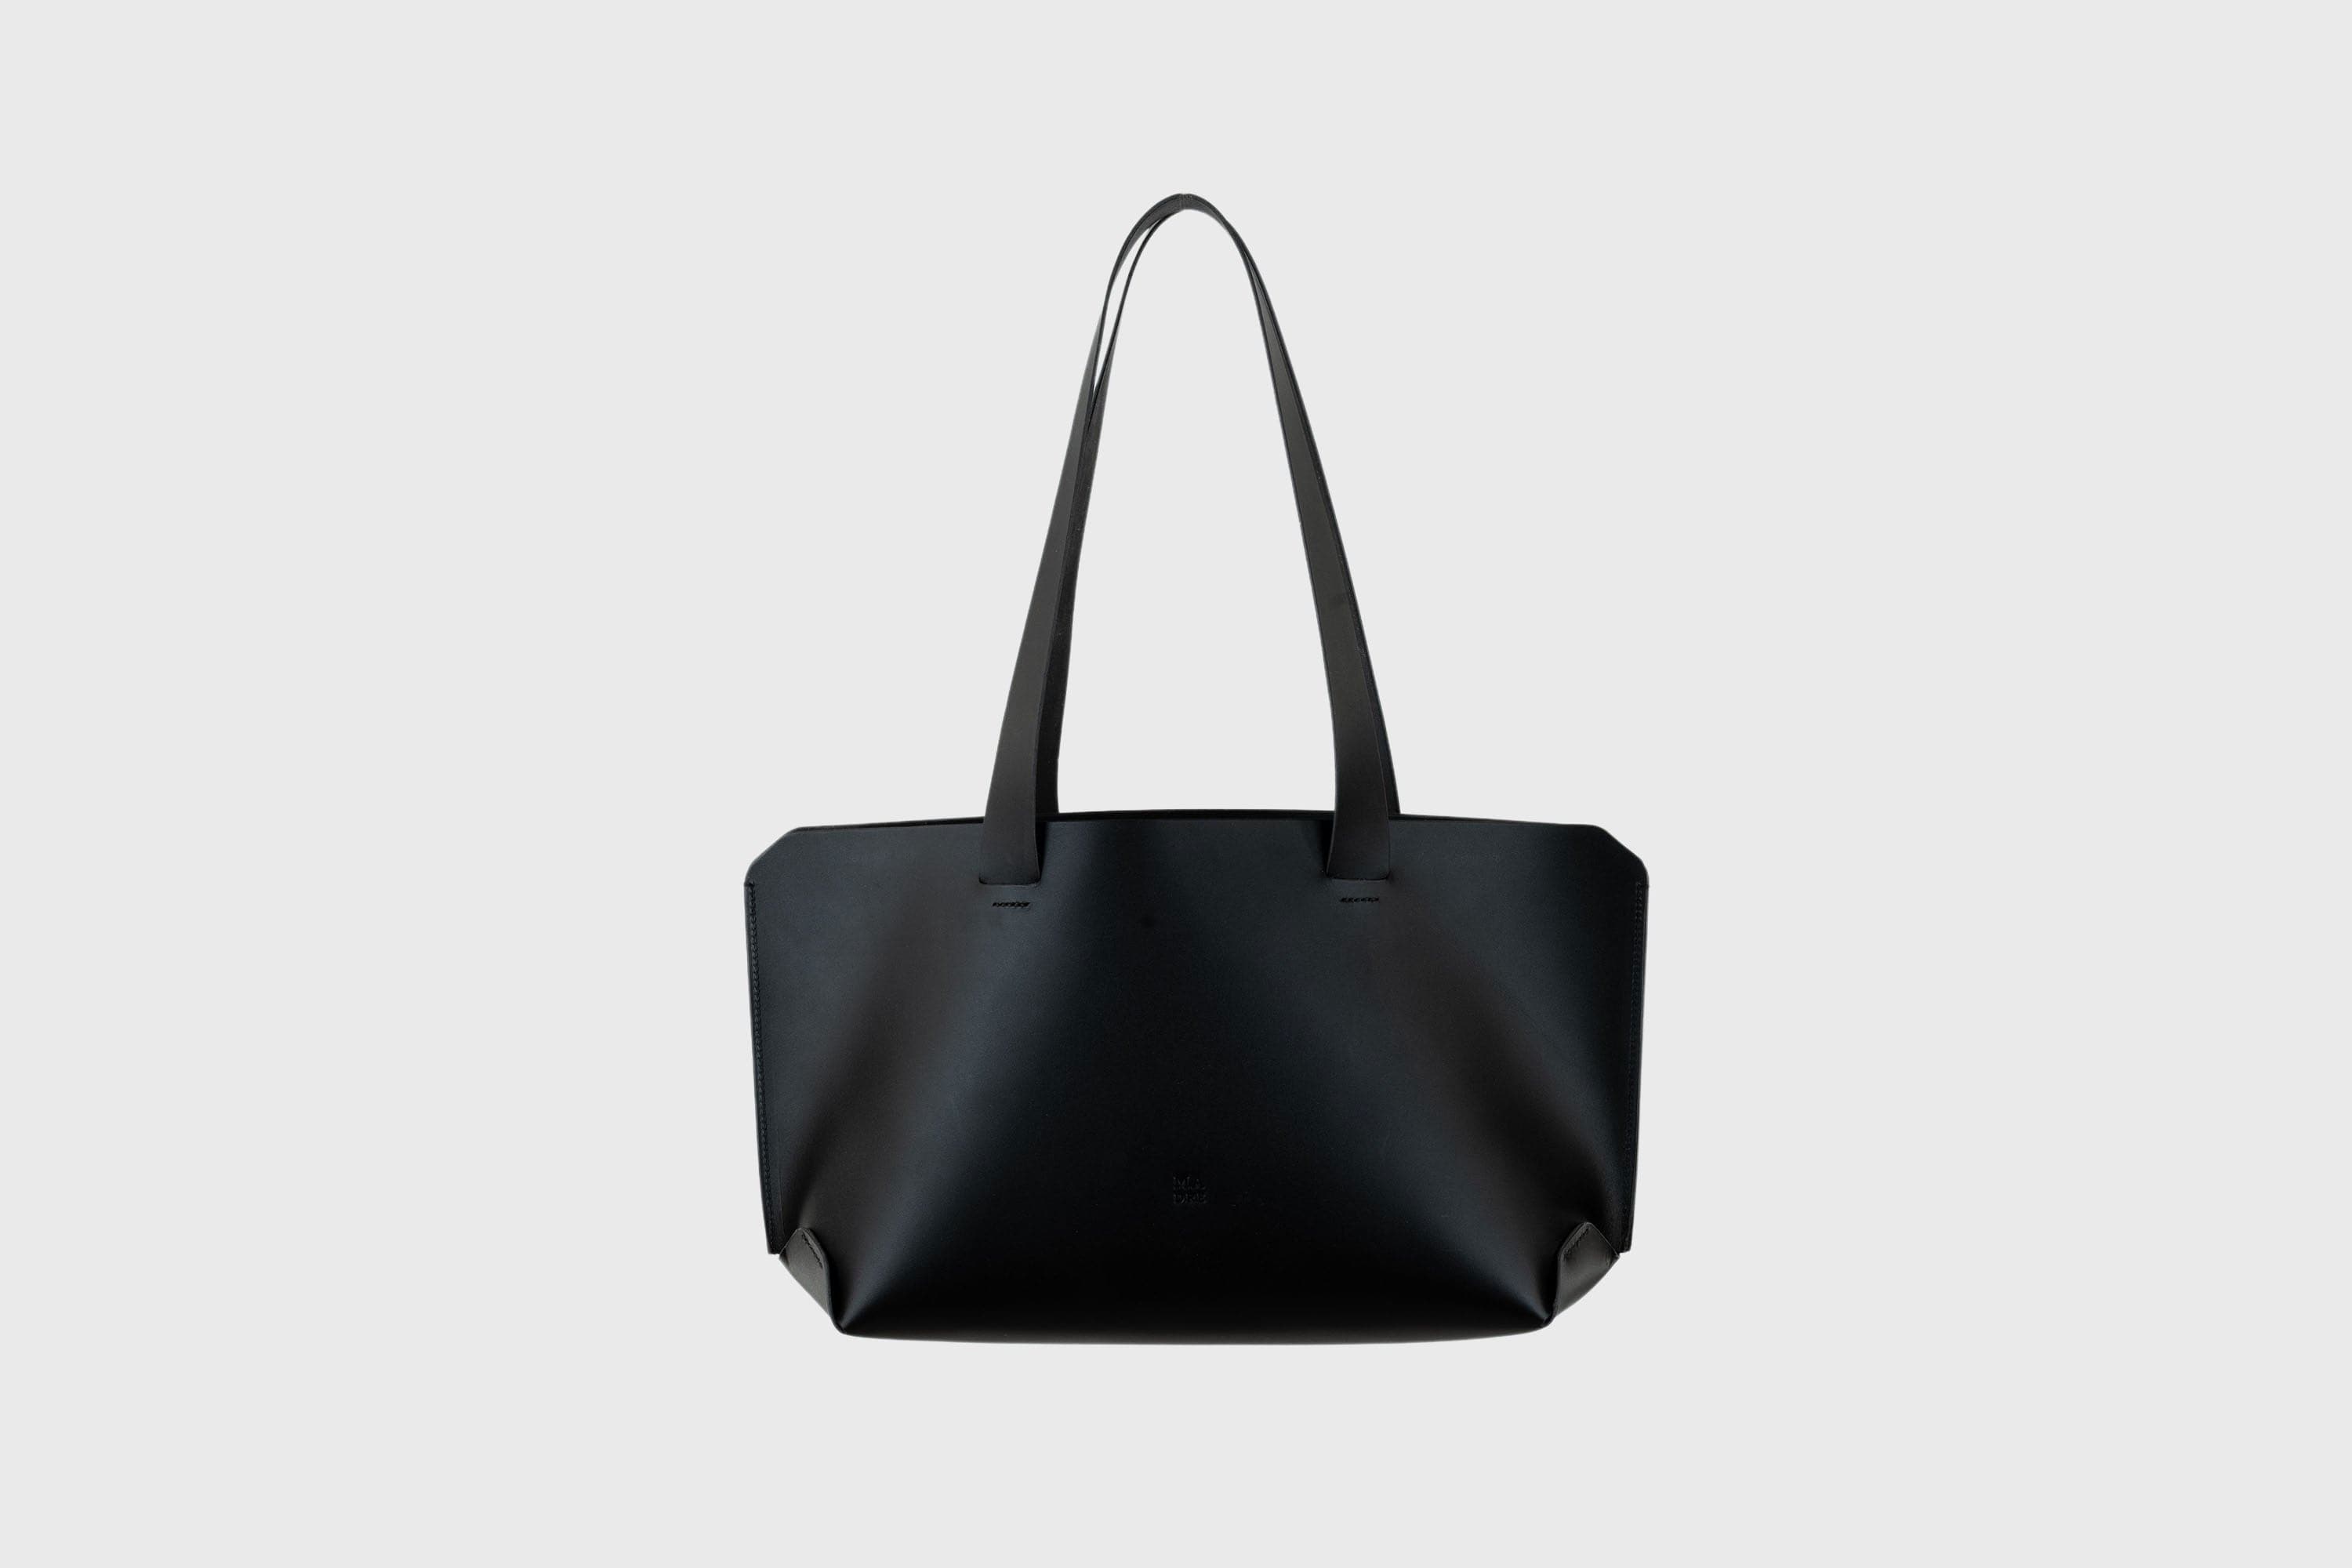 Tote Bag Black Color Vegetable Tanned Leather German Minimalistic Design By Manuel Dreesmann Atelier Madre Barcelona Spain